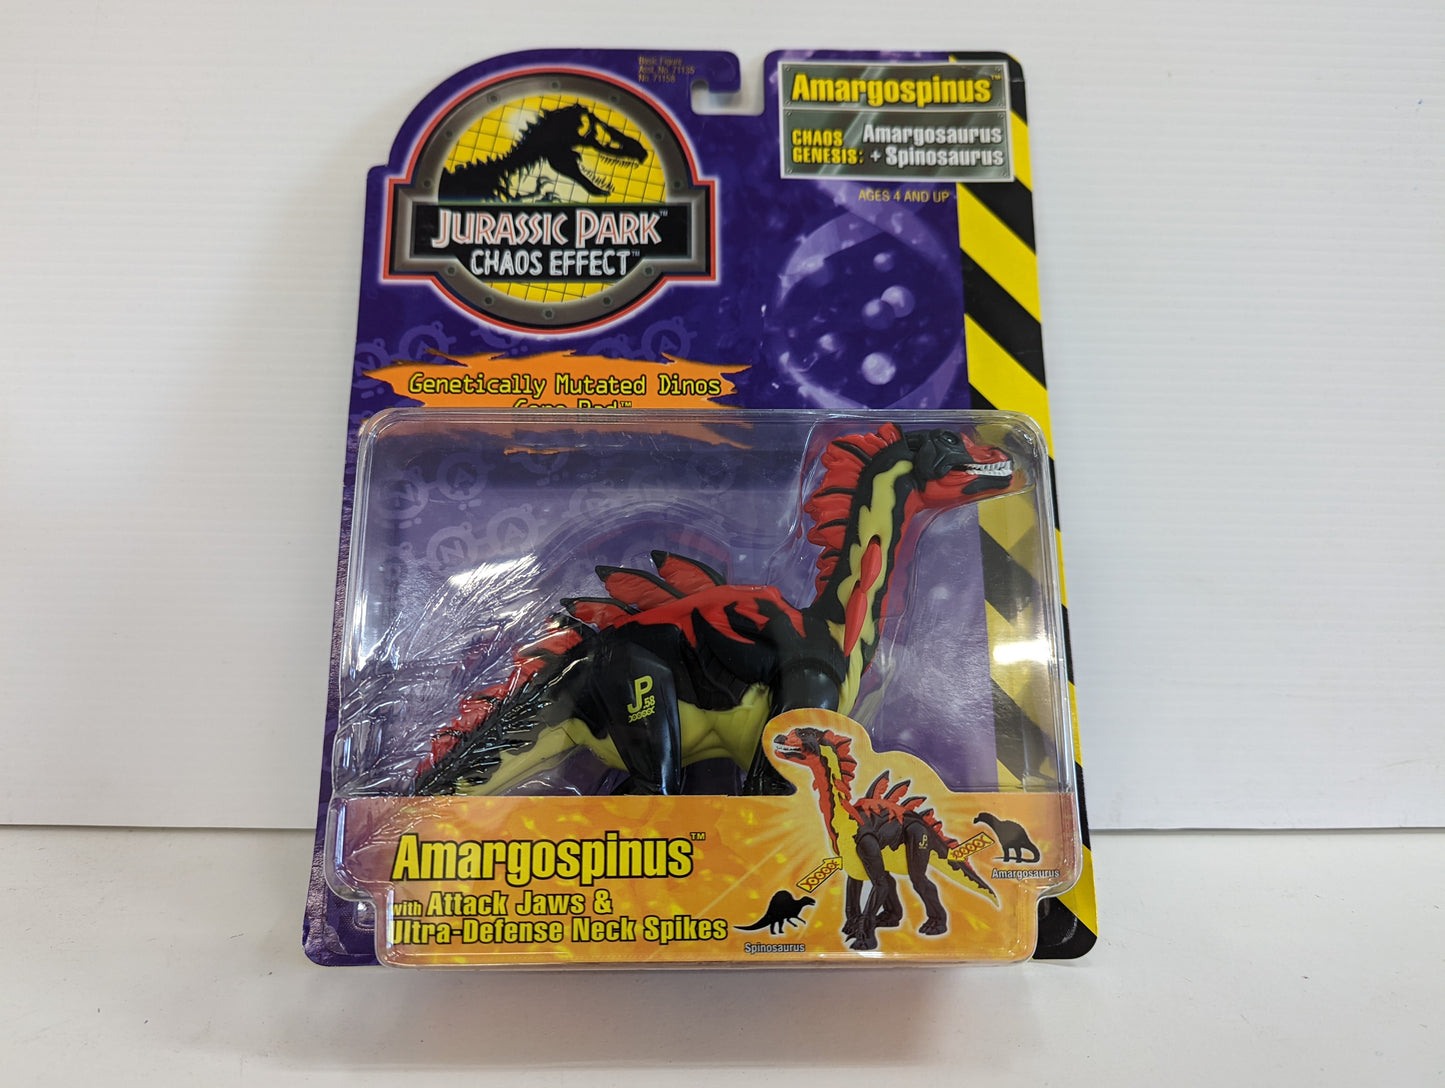 Jurassic Park Chaos Effect - Amargospinus 1997